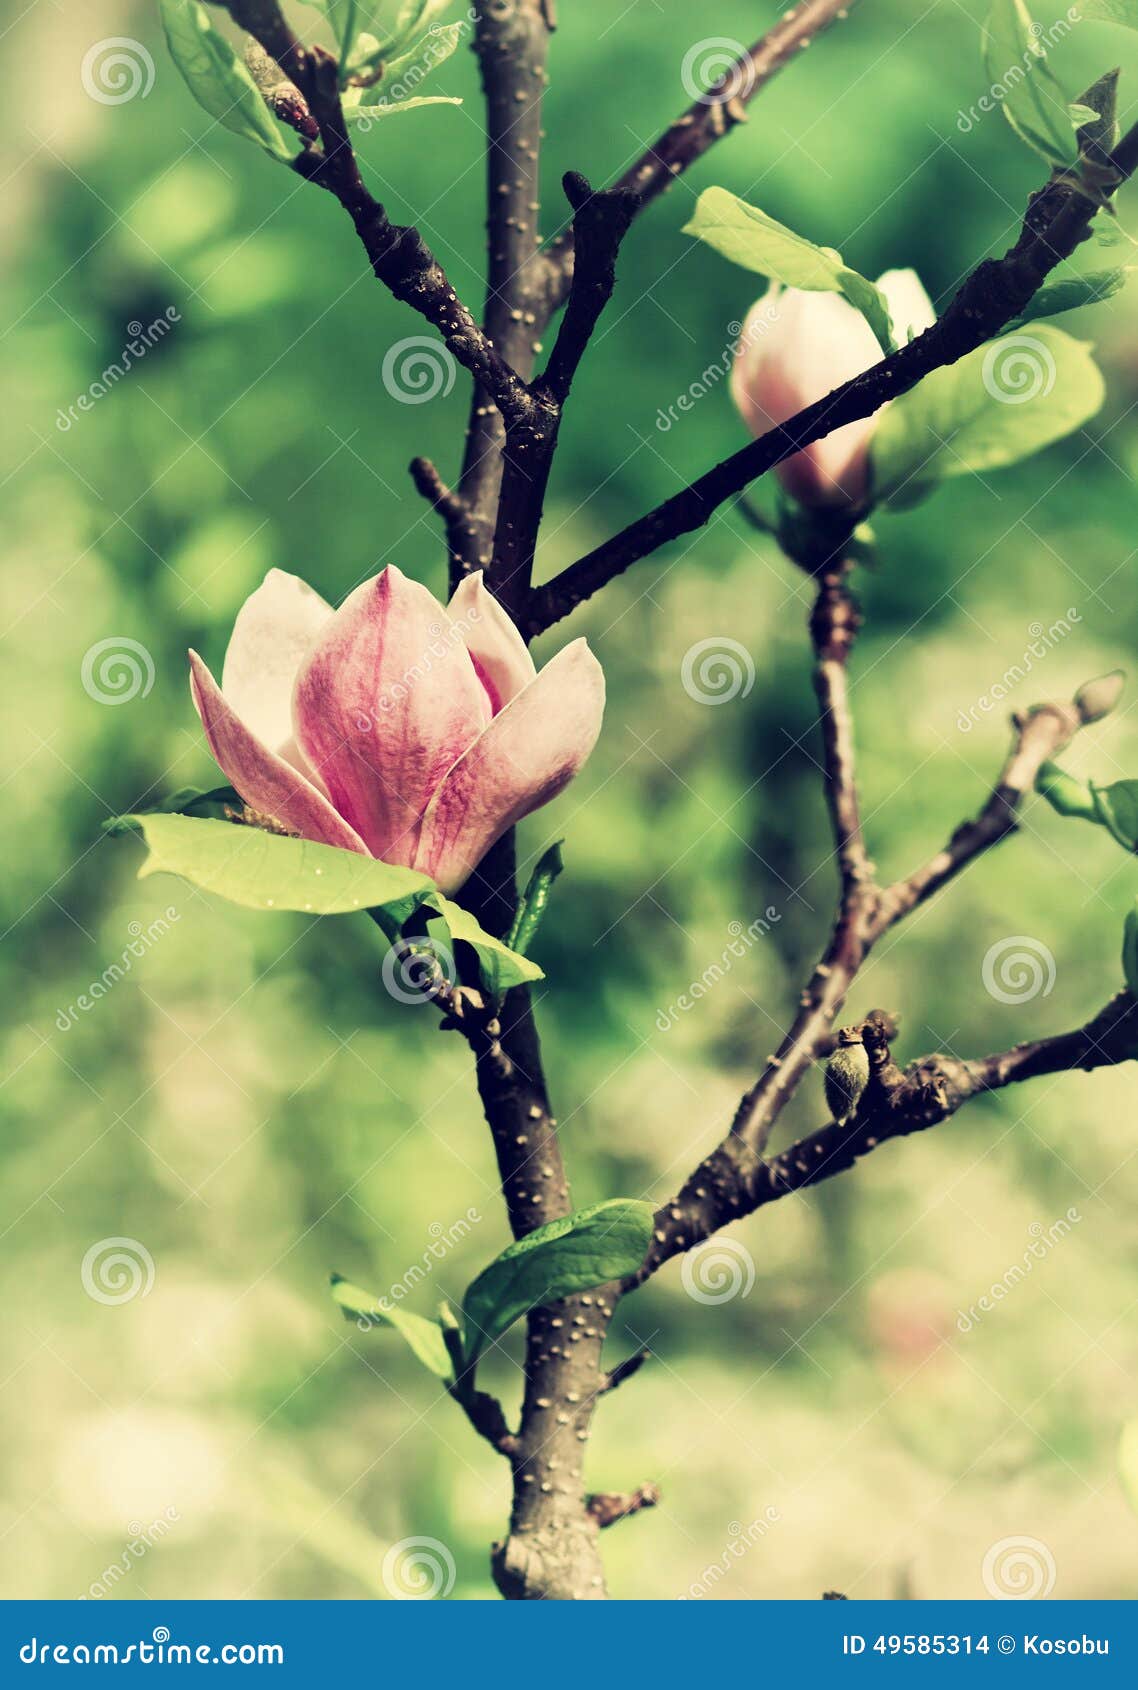 abloom flower of magnolia